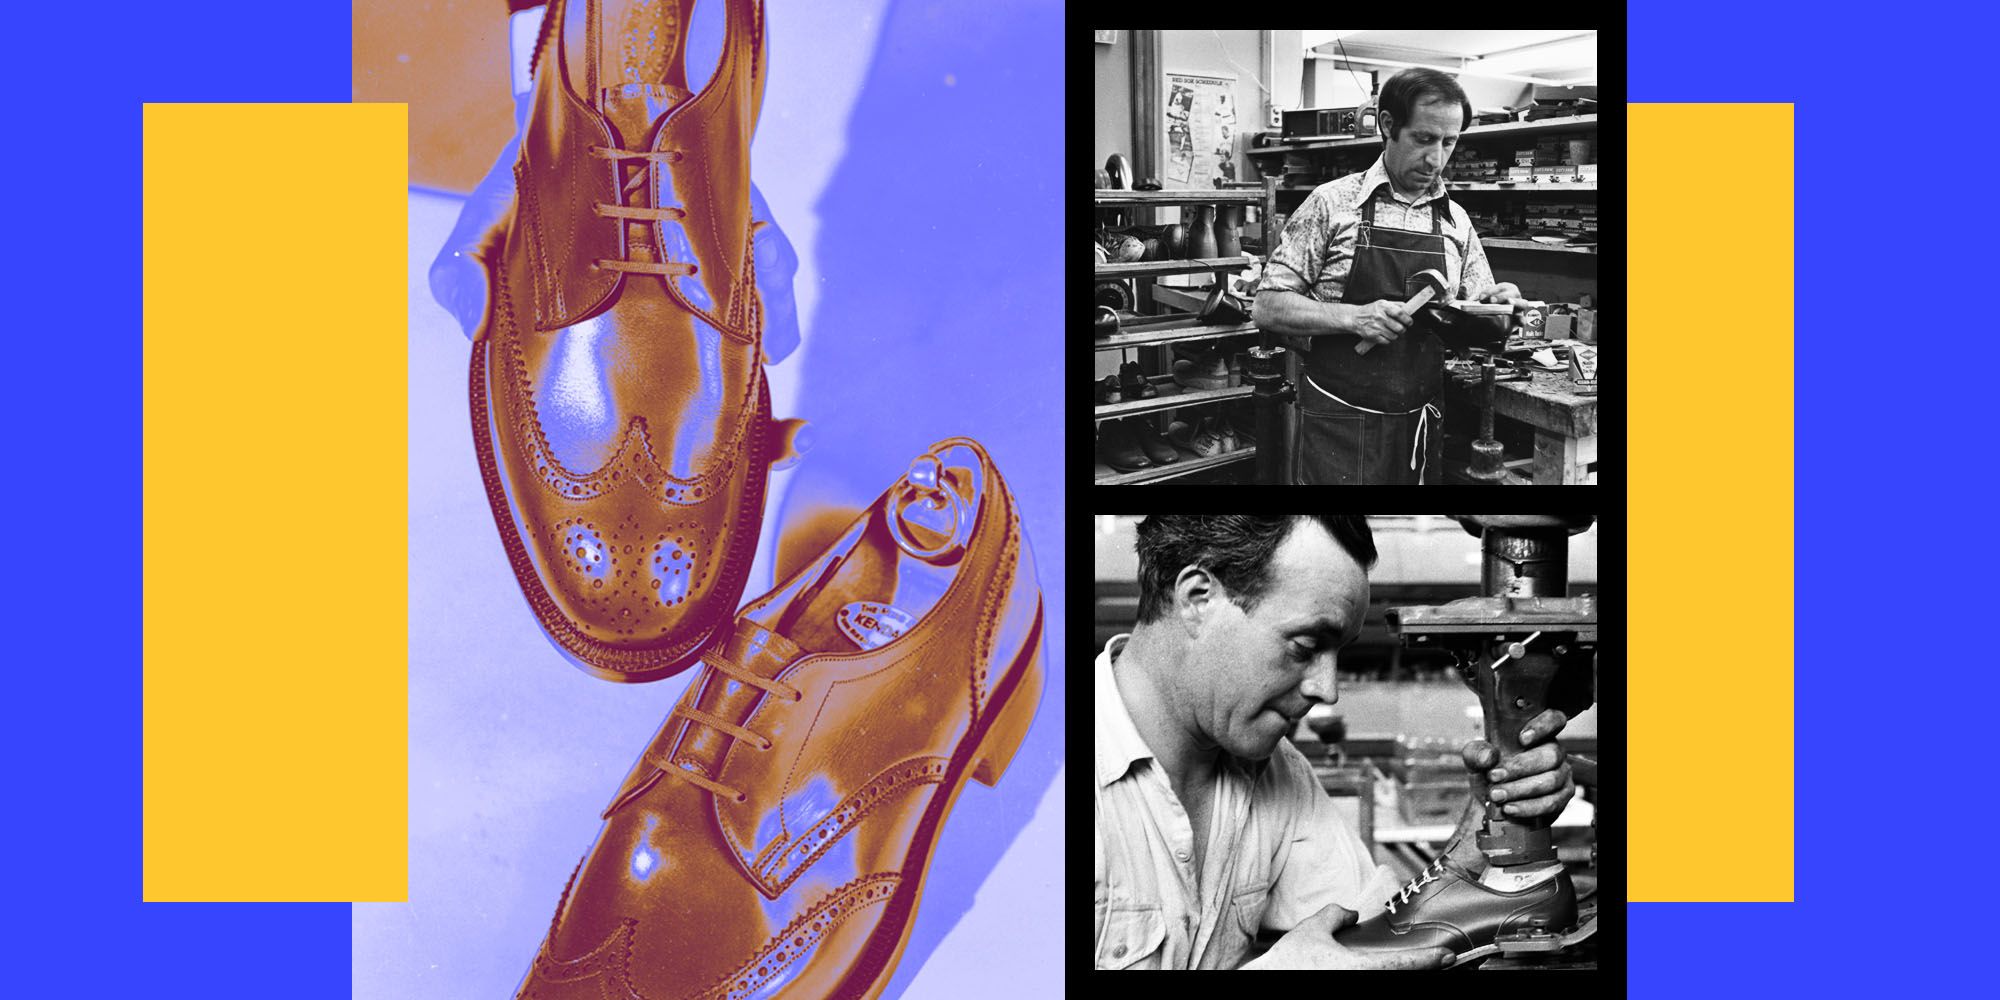 Martine Rose: The British Designer Bringing Back Square Toe Shoes